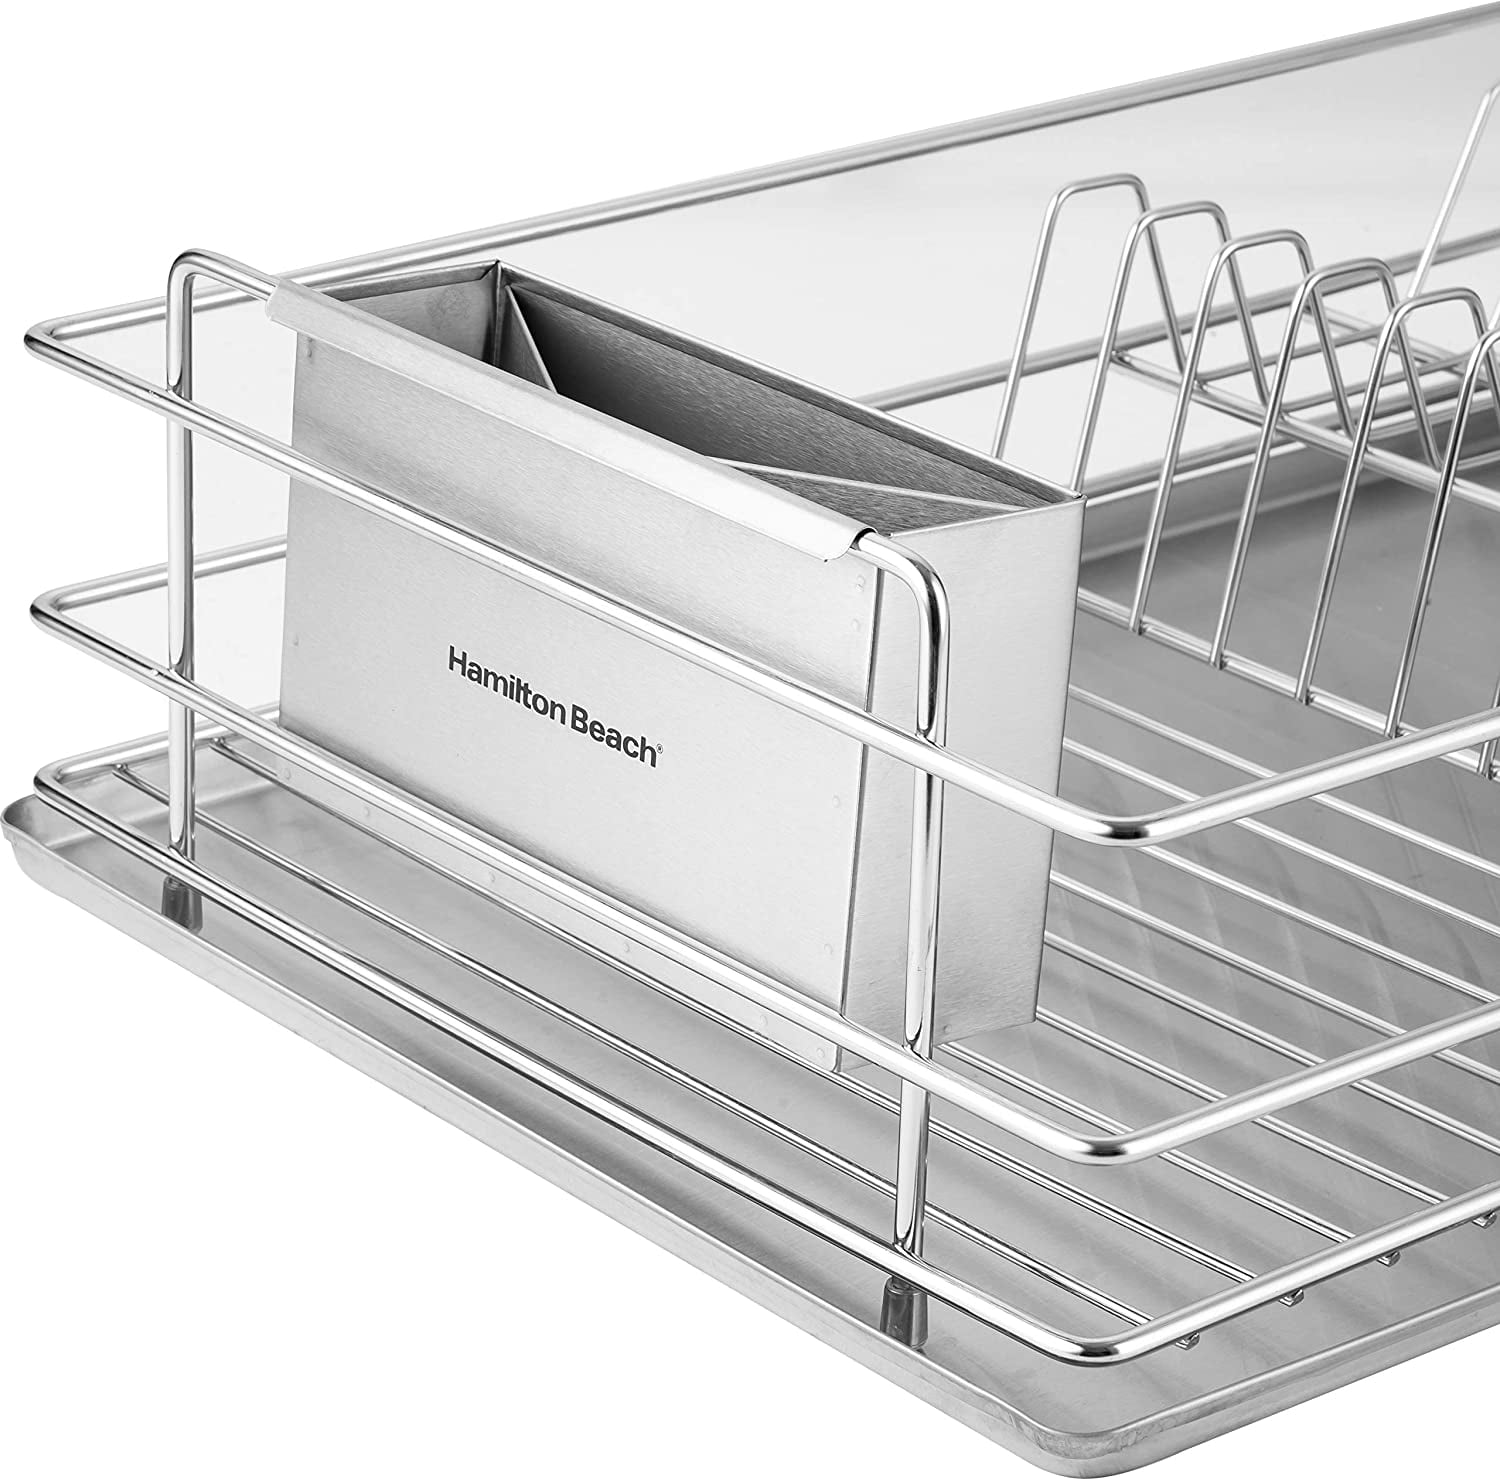 PremiumRacks In Sink Dish Rack - 304 Stainless Steel - Adjustable - Mu